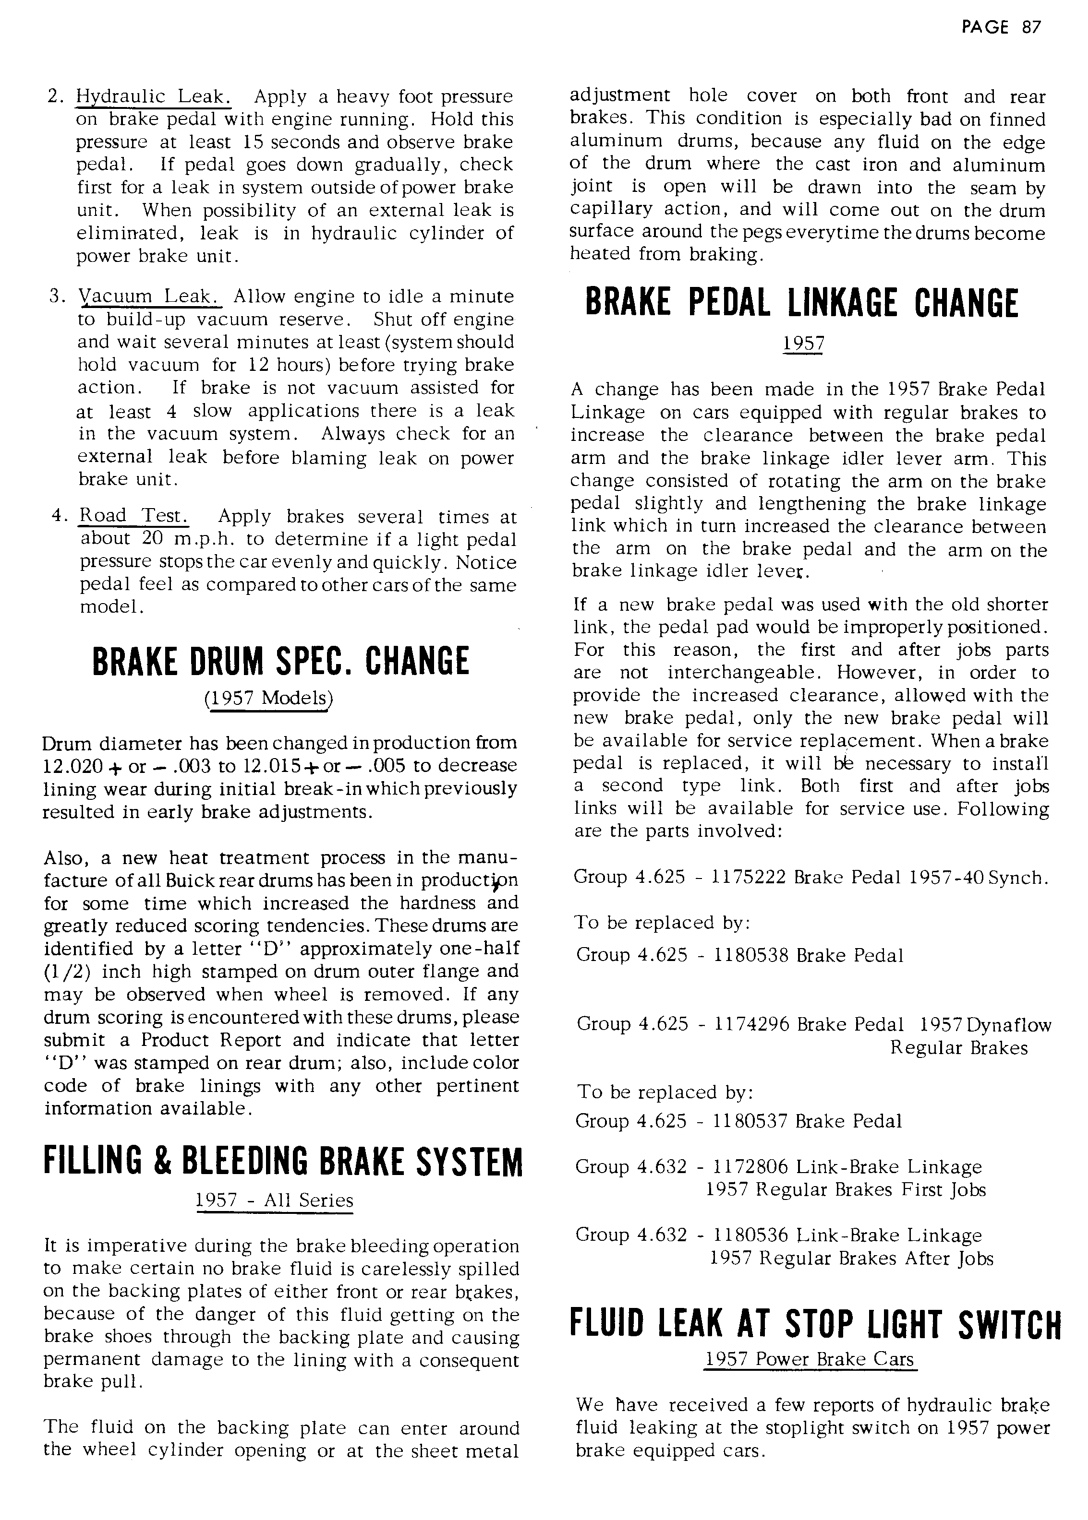 n_1957 Buick Product Service  Bulletins-091-091.jpg